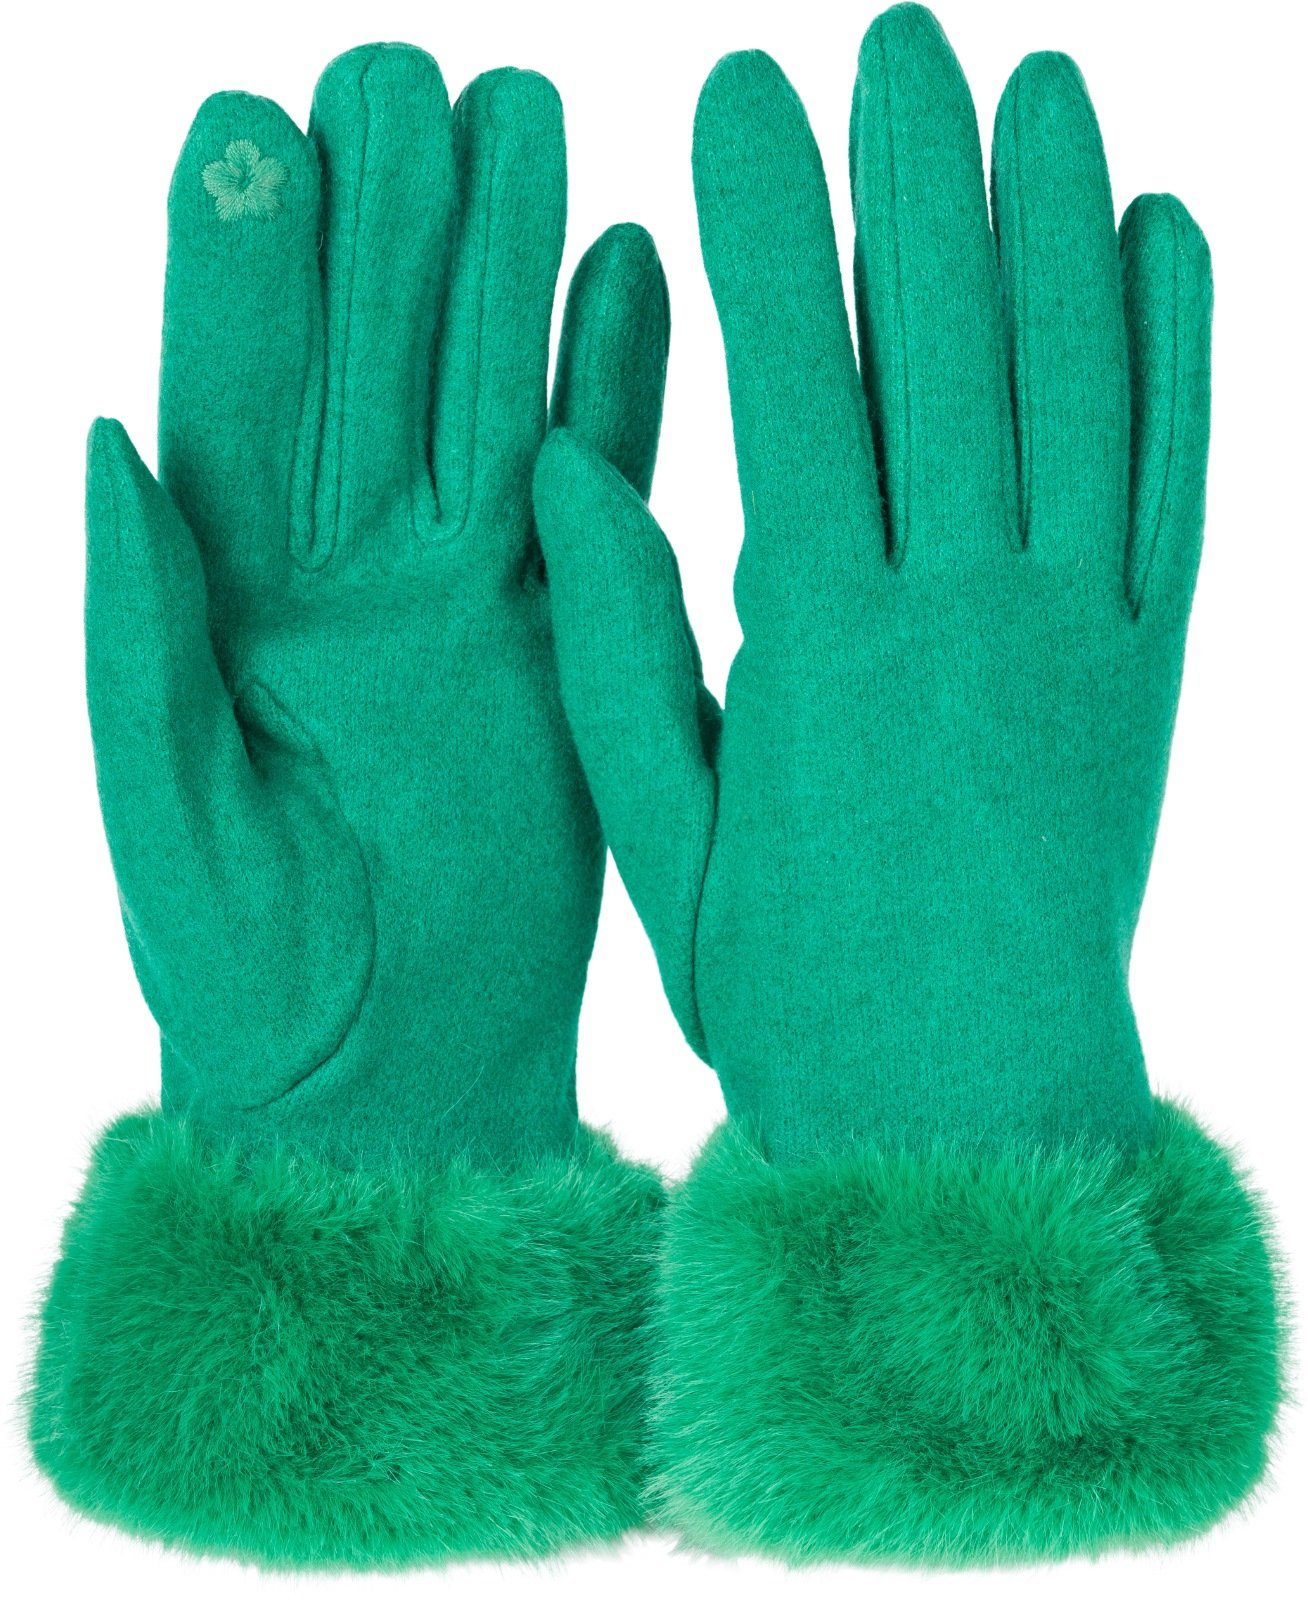 Handschuhe Fleecehandschuhe Grün Kunstfell mit Touchscreen Unifarbene styleBREAKER